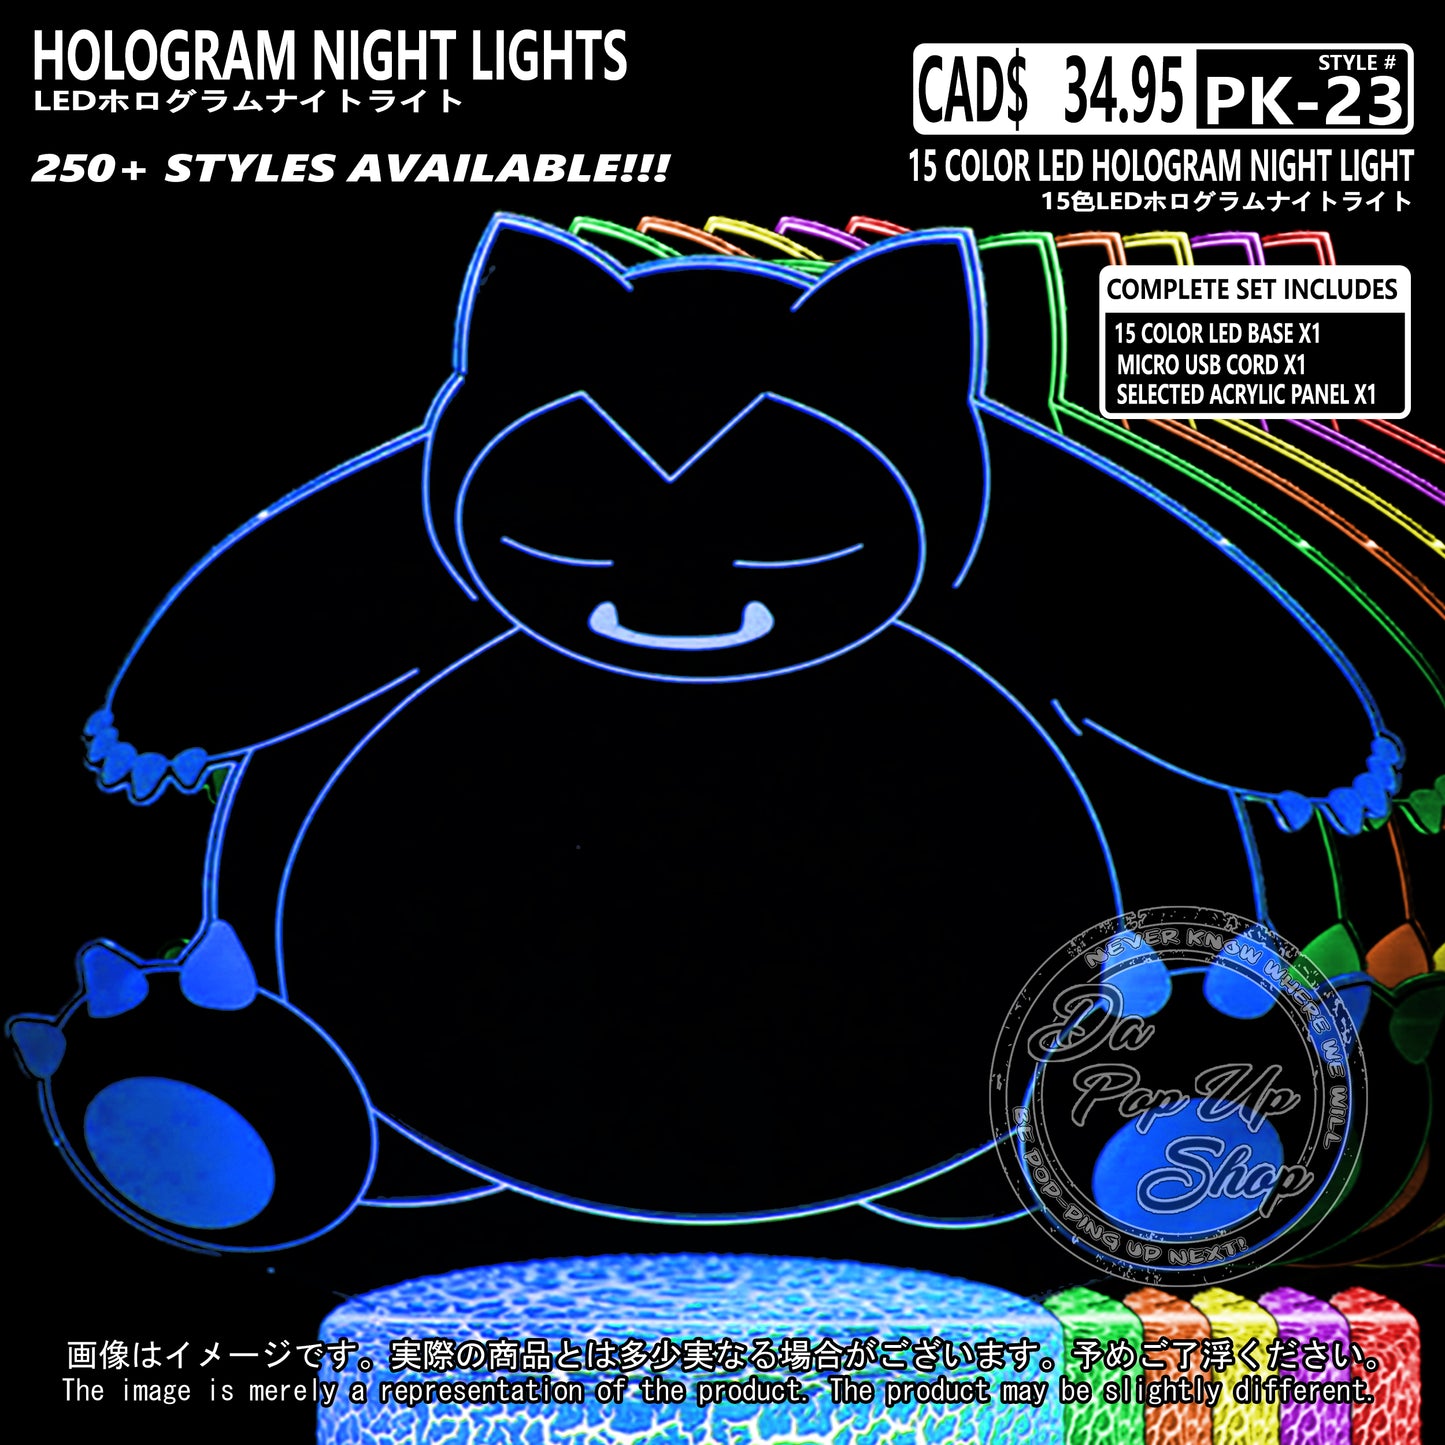 (PKM-23) SNORLAX Pokemon Hologram LED Night Light